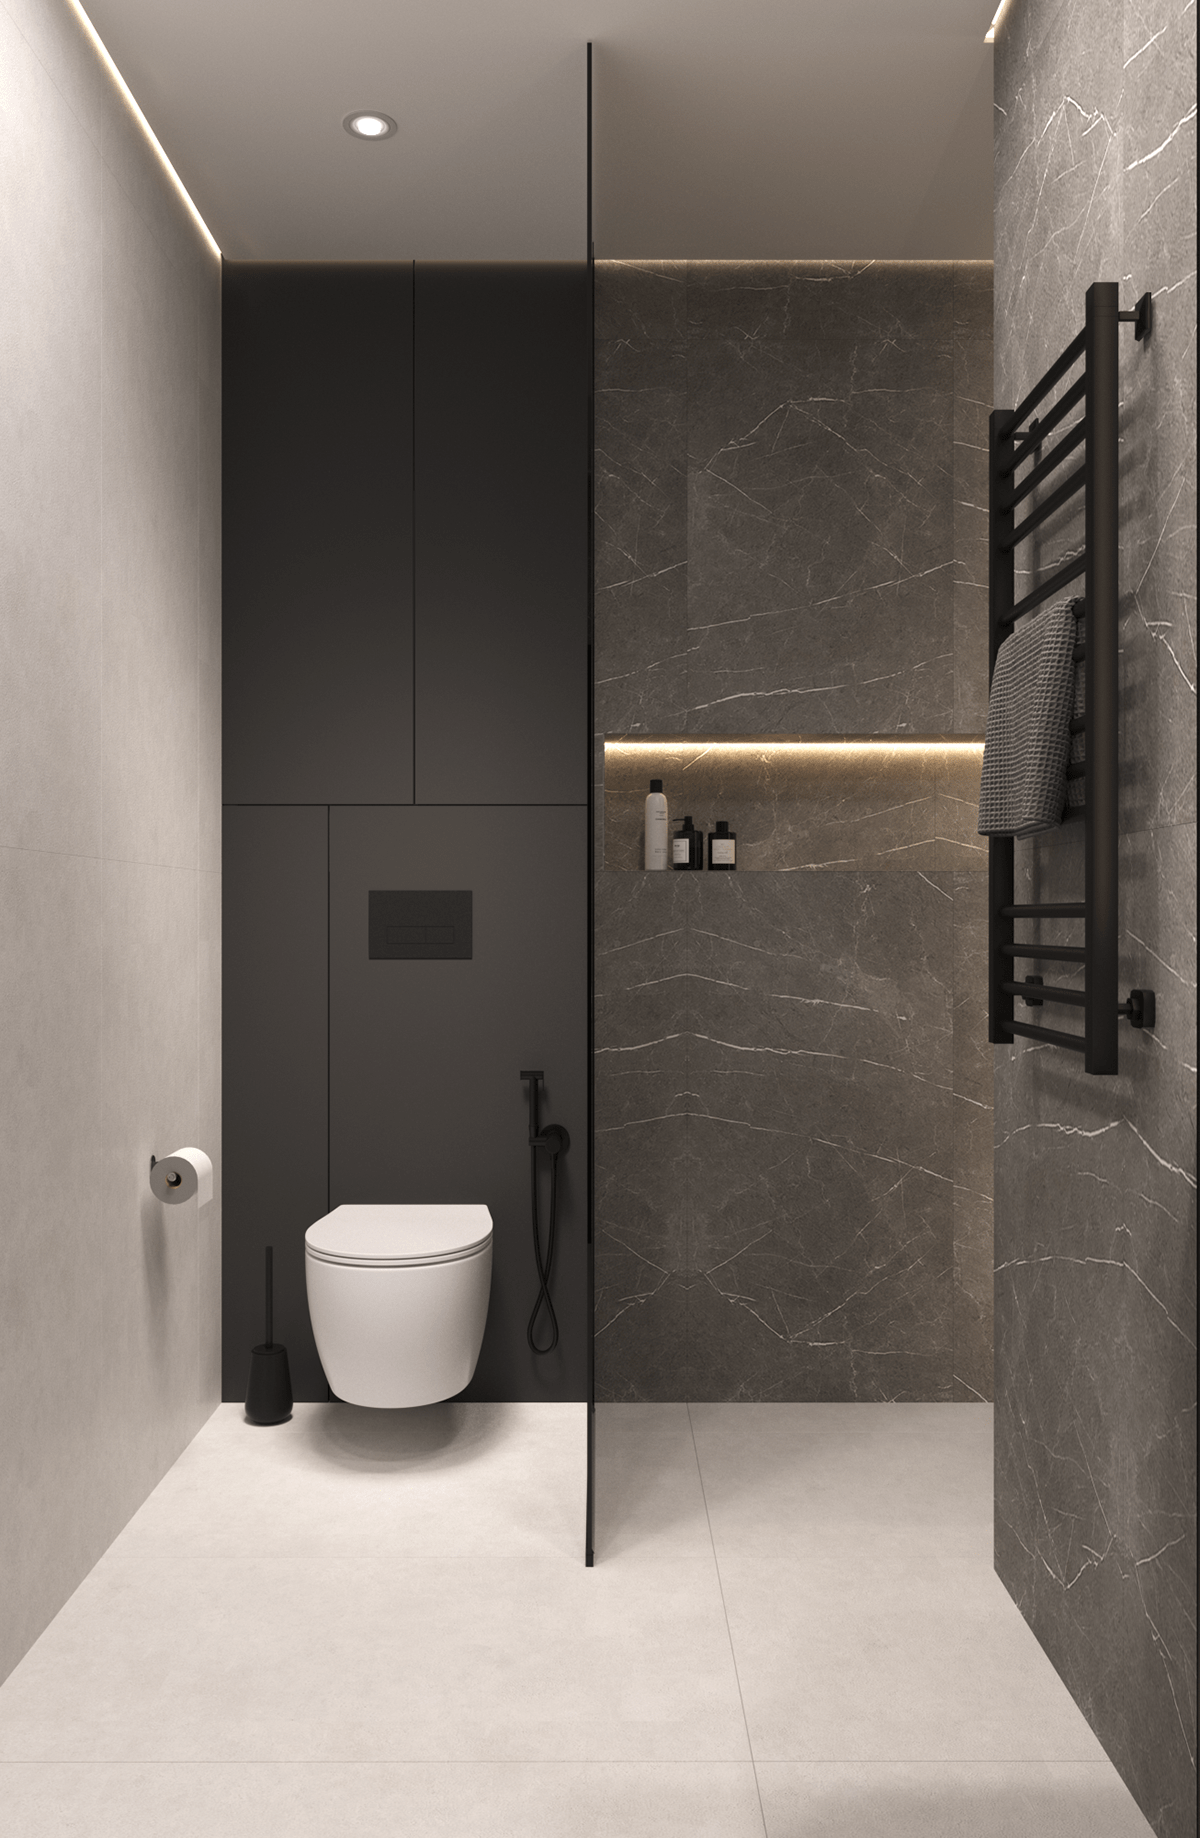 3ds max corona interior design  3d modeling bathroom bathroom design дизайн интерьера visualization Визуализация интерьера современный дизайн